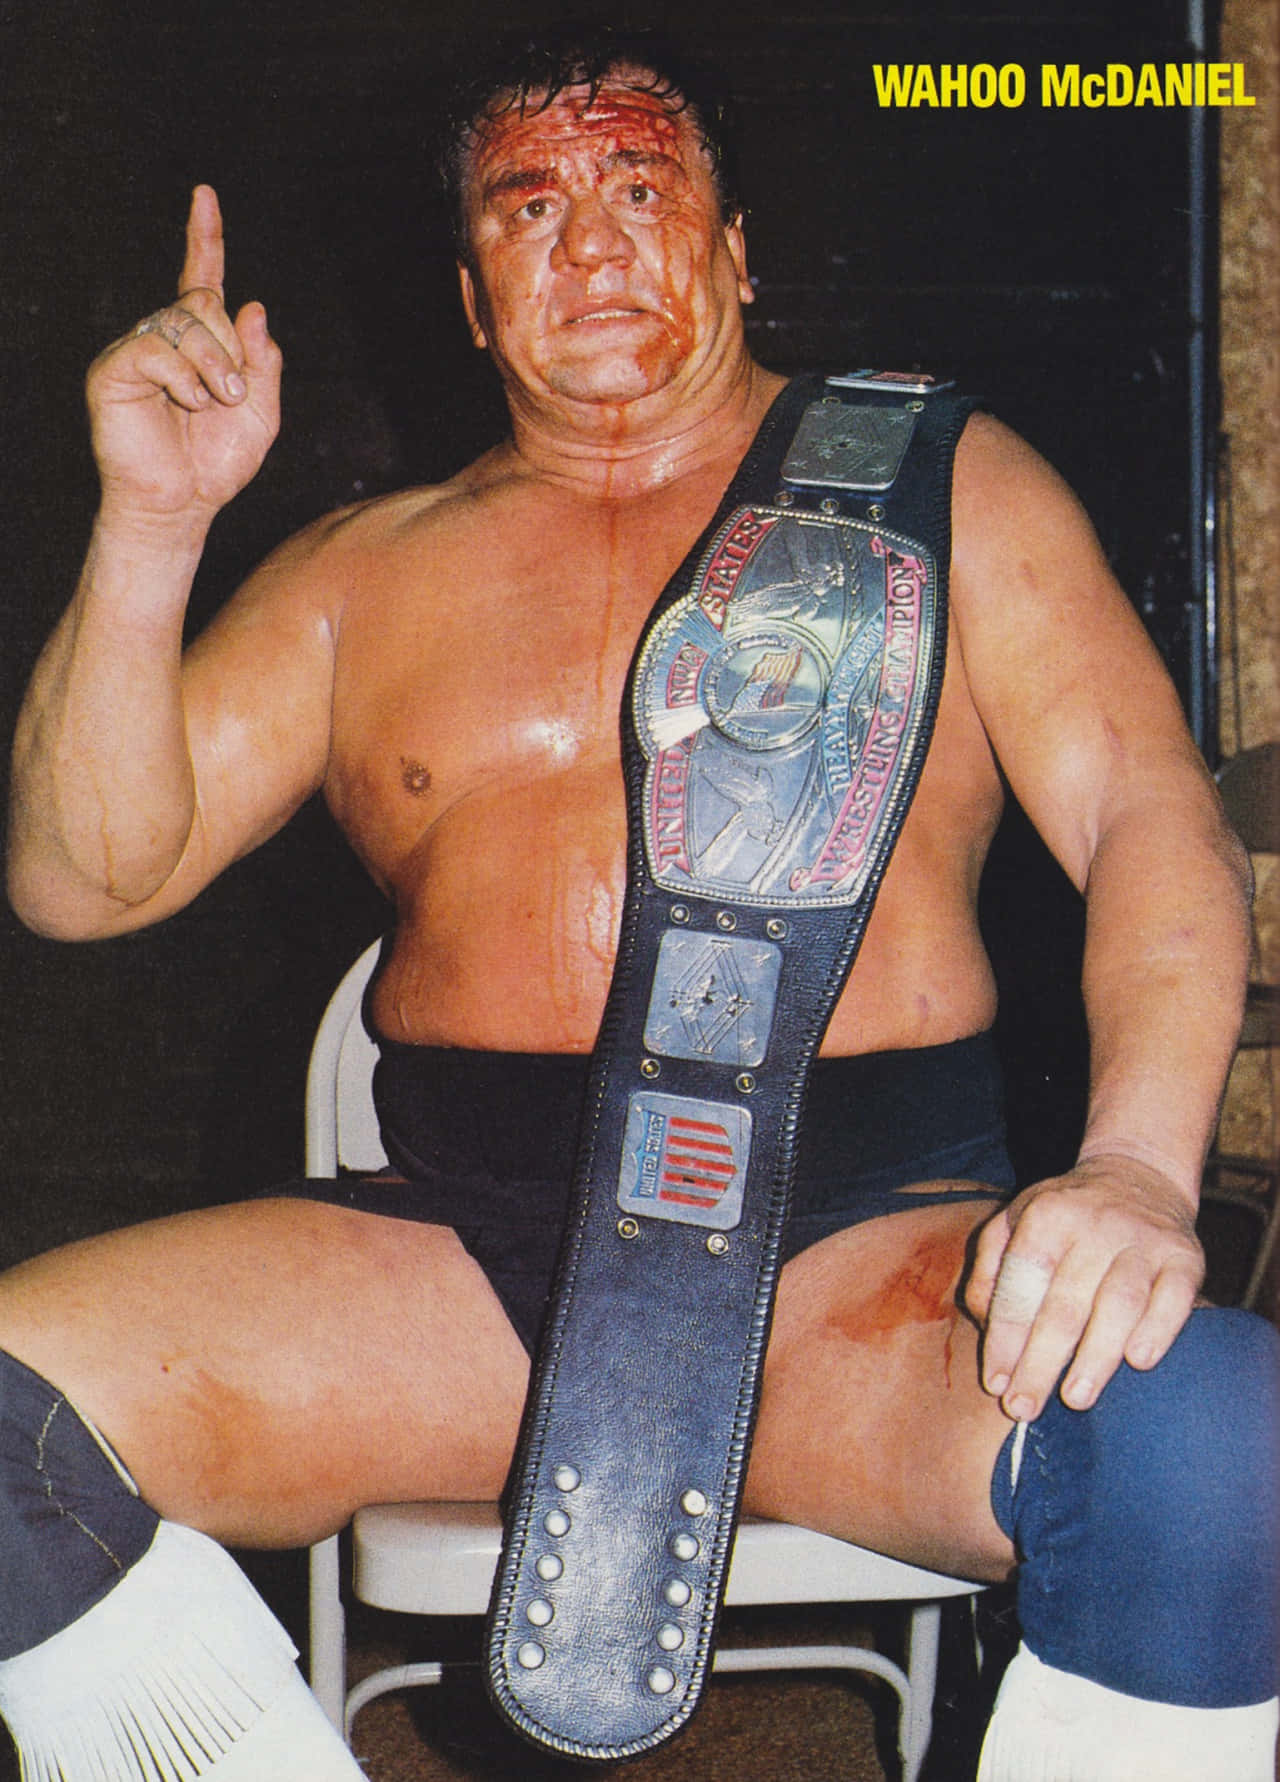 Native American Heavyweight Champion Wahoo McDaniel 1985 Photograph Wallpaper